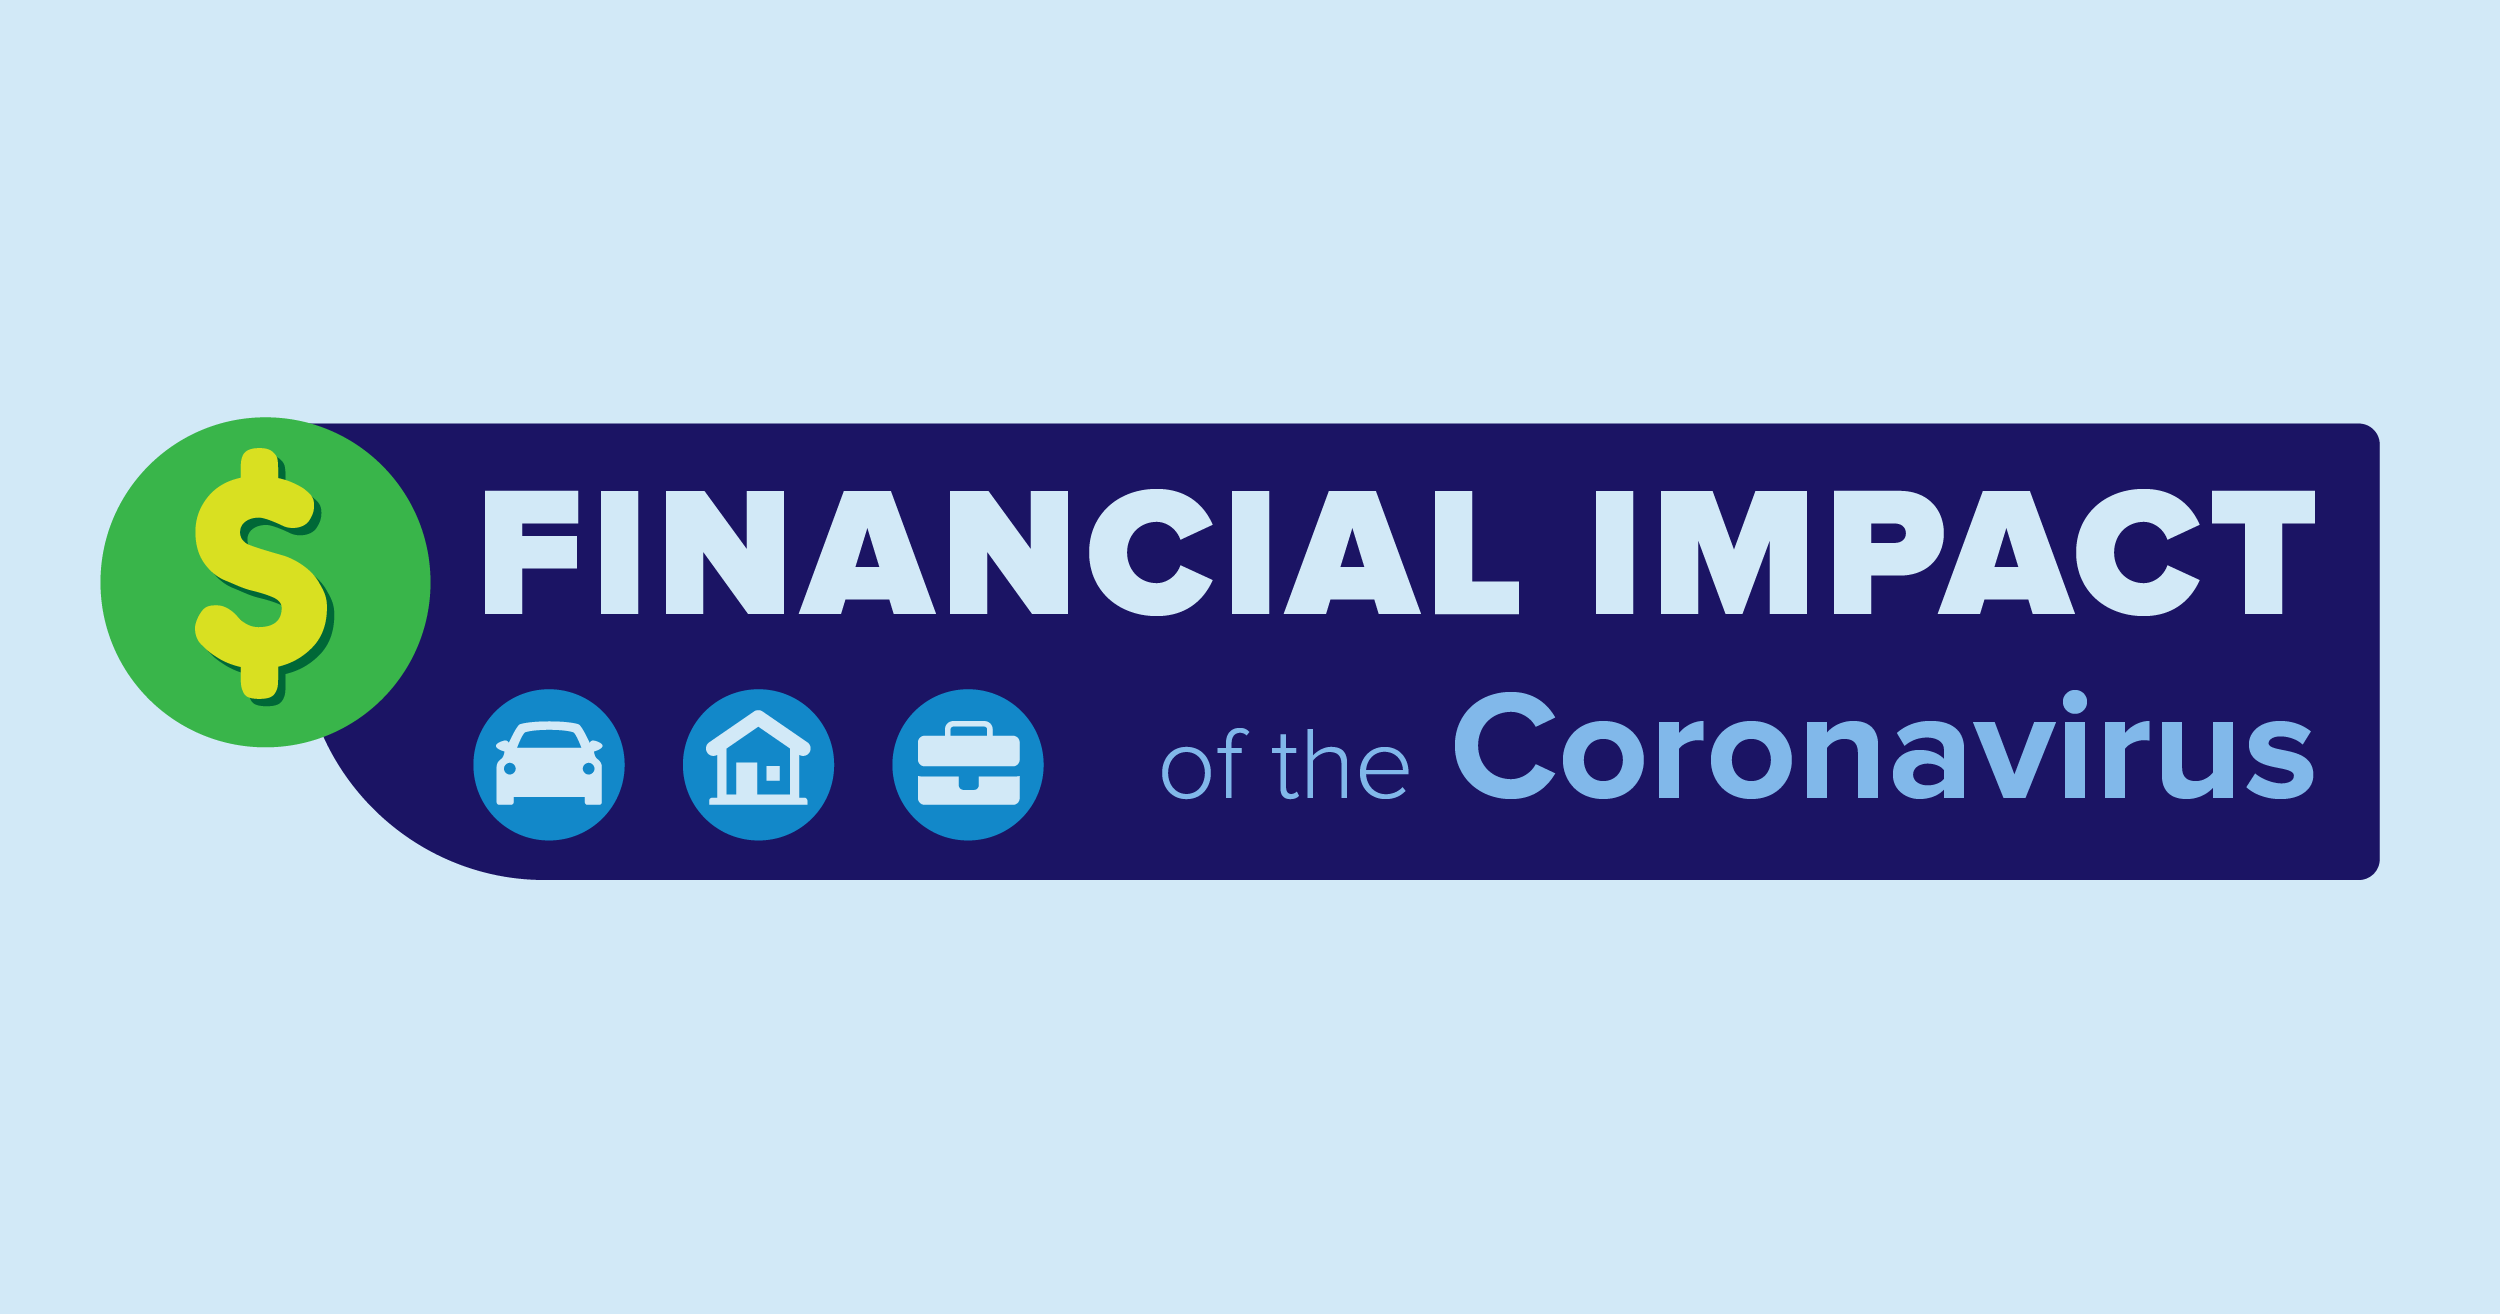 Logo, which says "Financial Impact of the Coronavirus" 